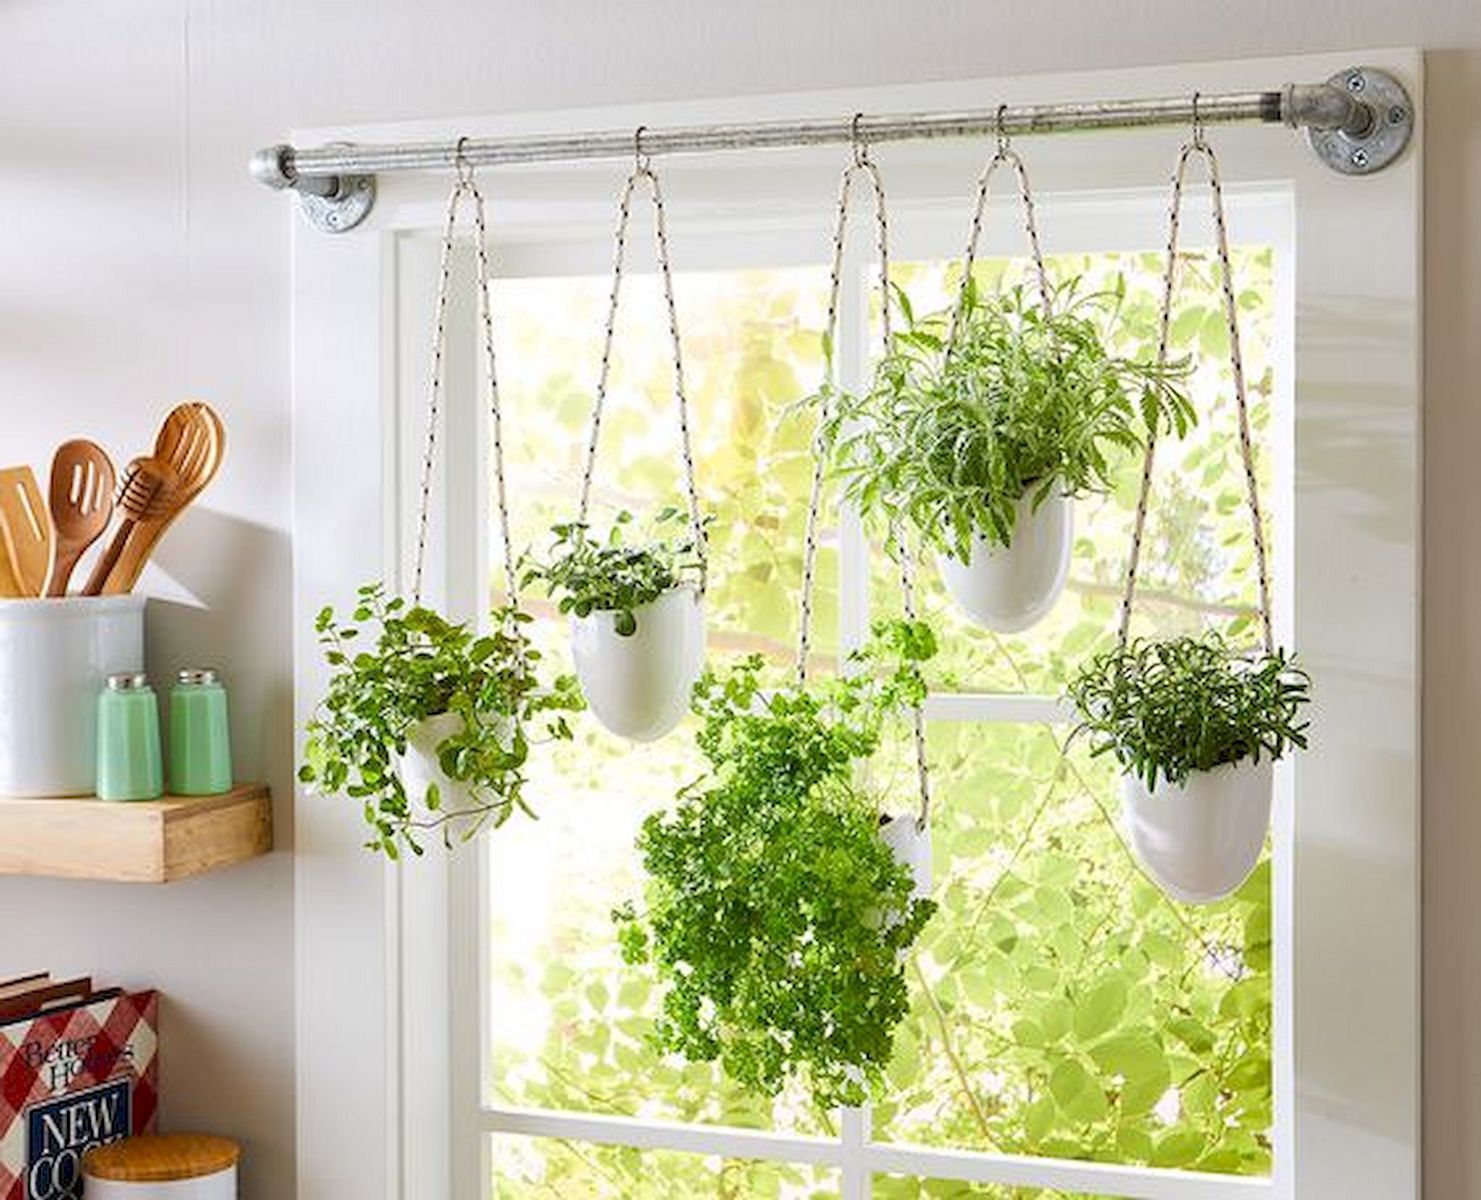 Hanging Plants Design Ideas